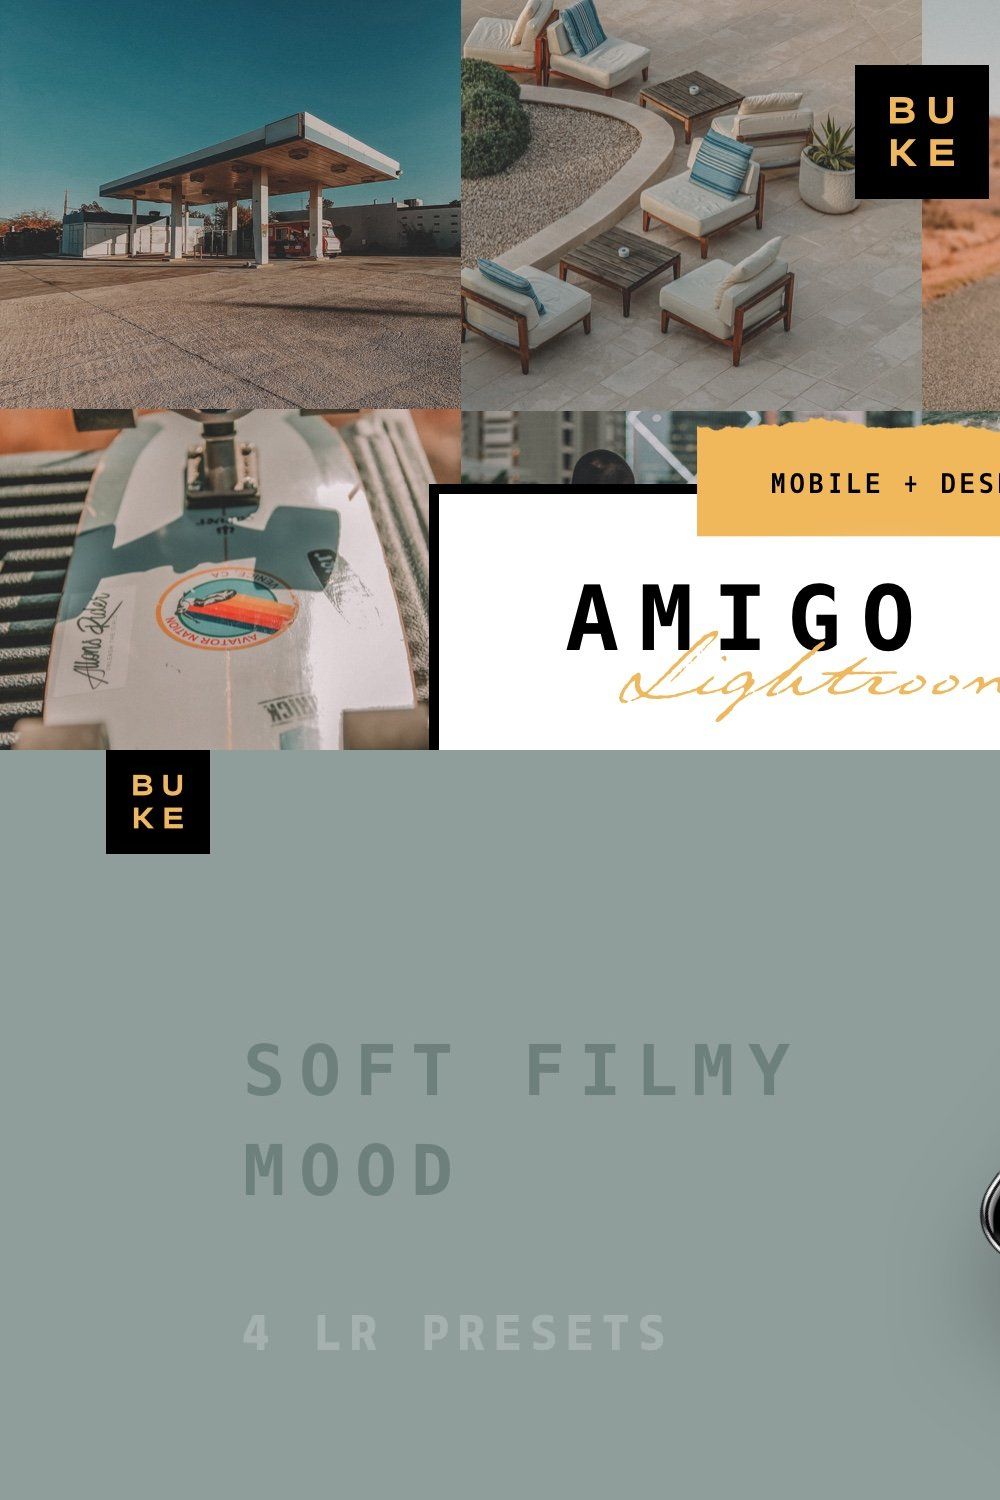 Amigo Film – 4 Lightroom Preset Pack pinterest preview image.